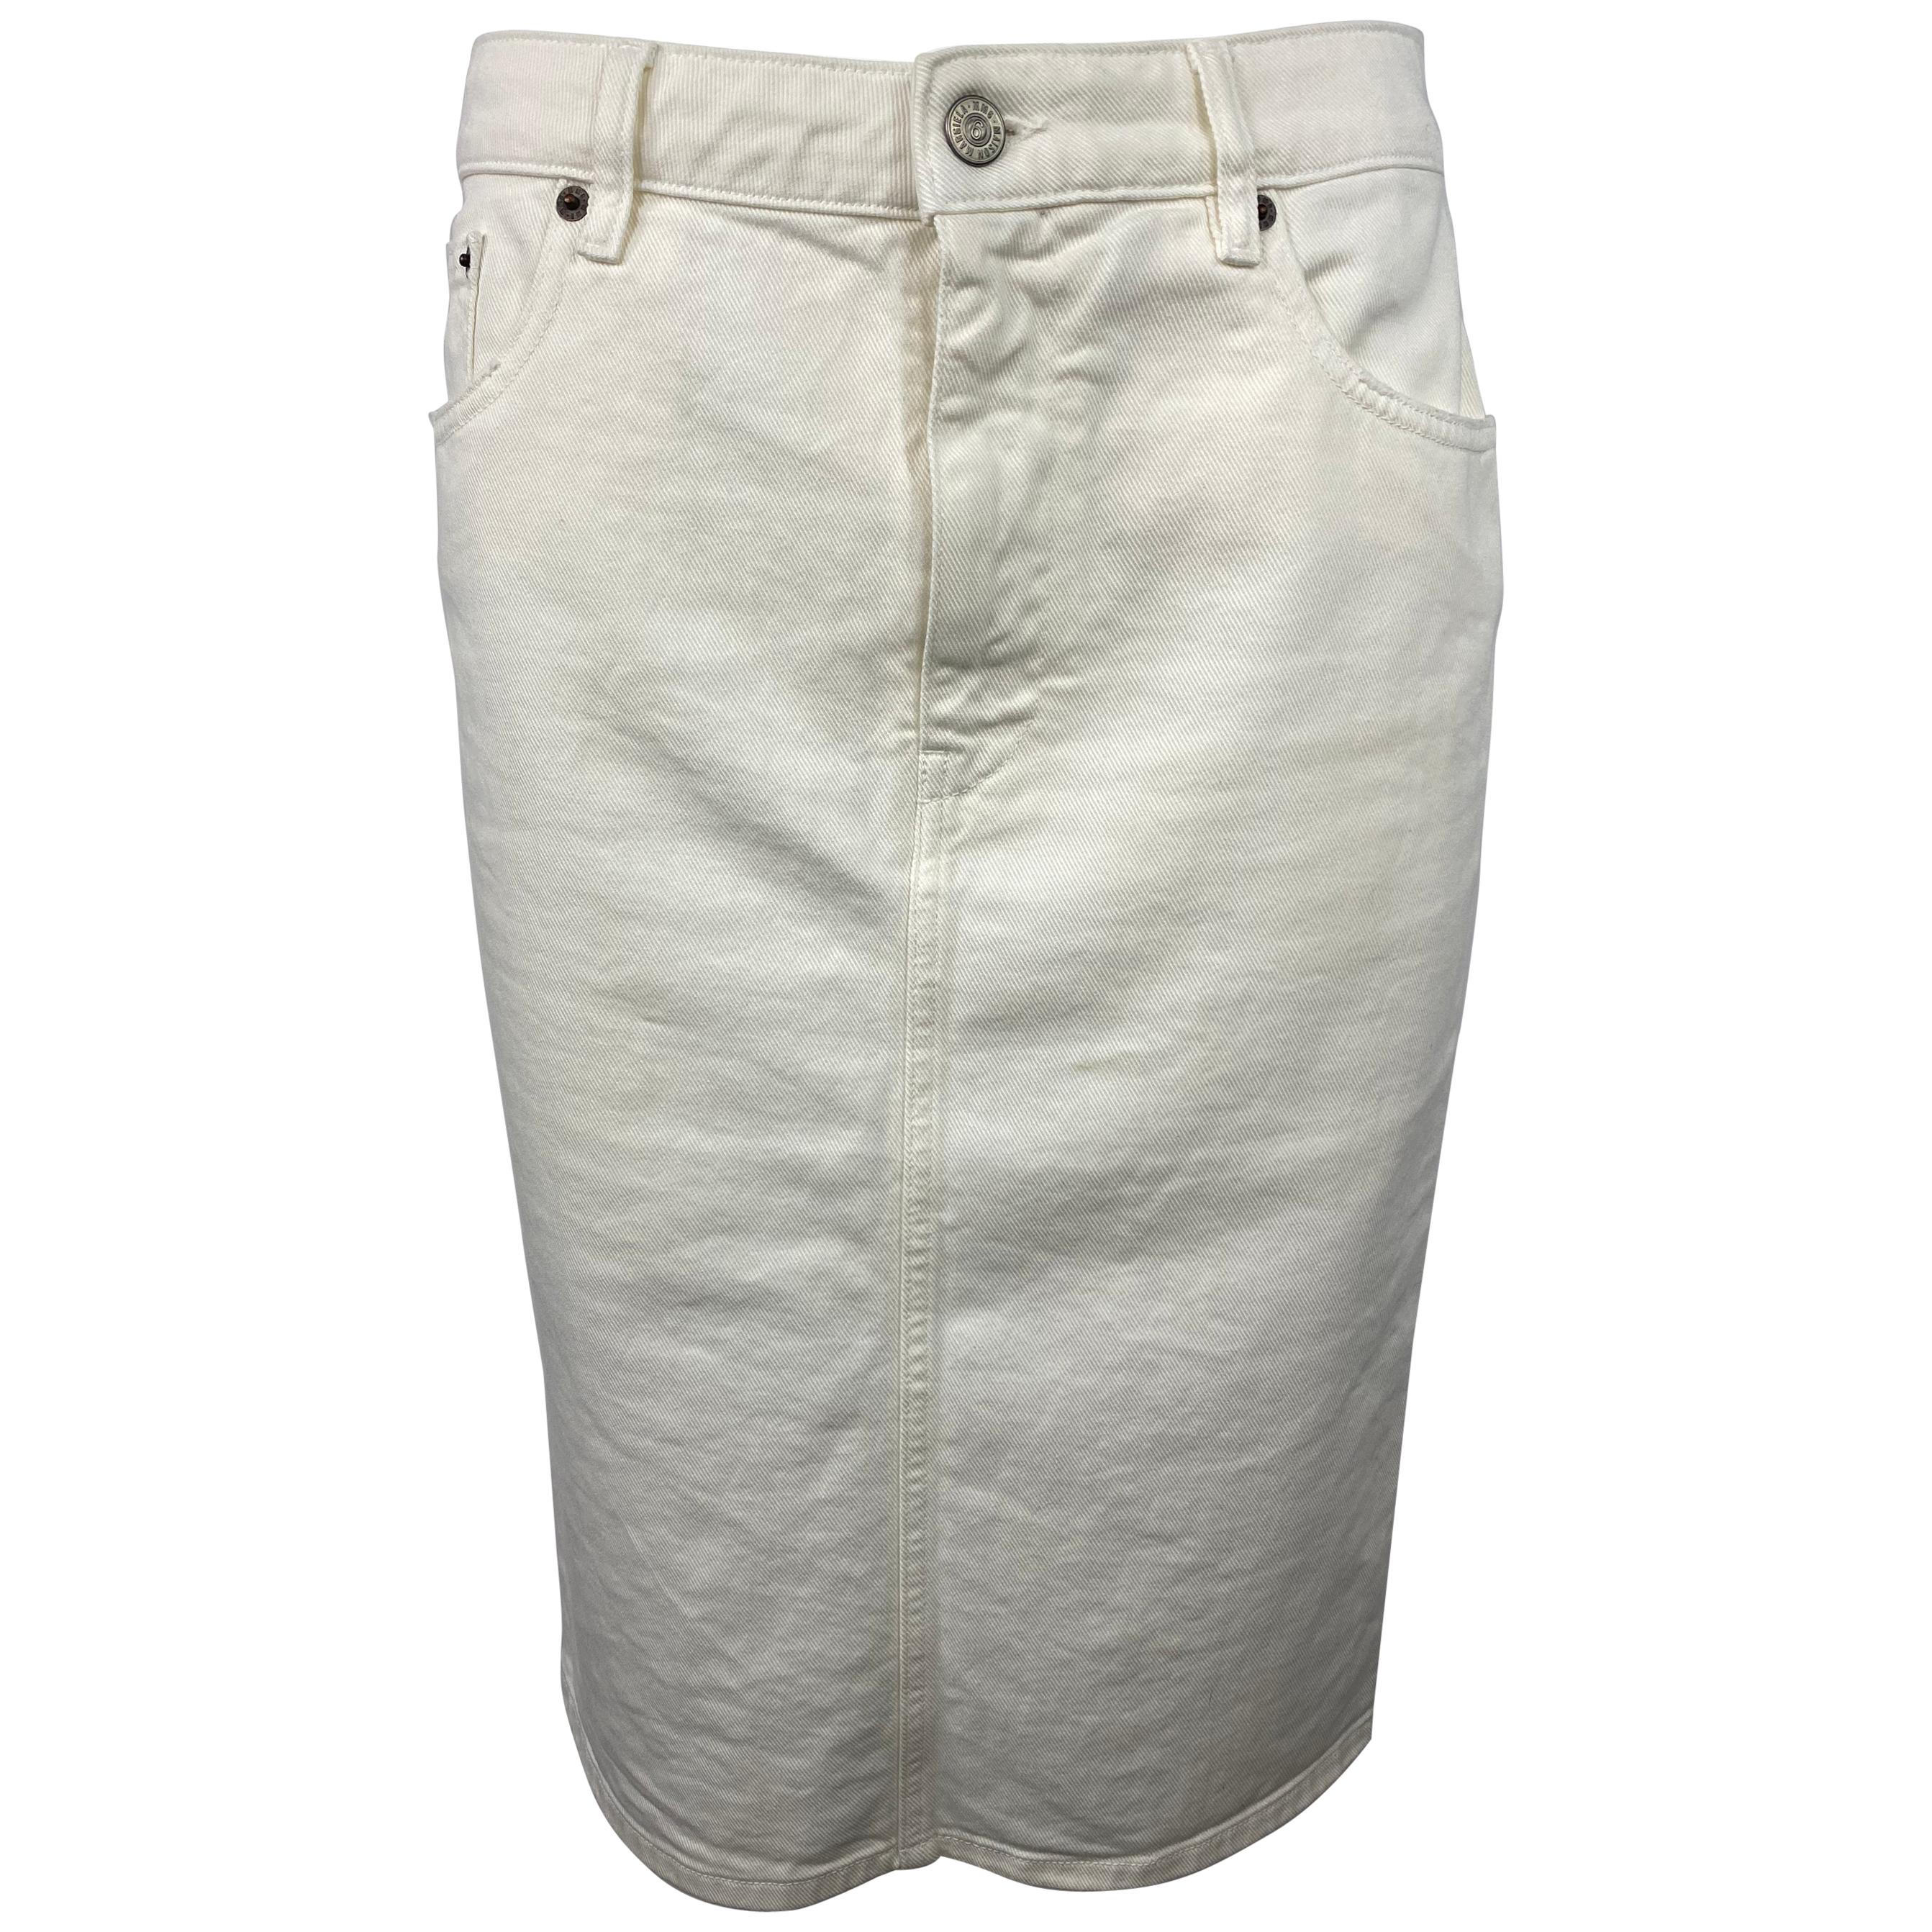 MM6 Maison Margiela White Denim Pencil Skirt, Size 42